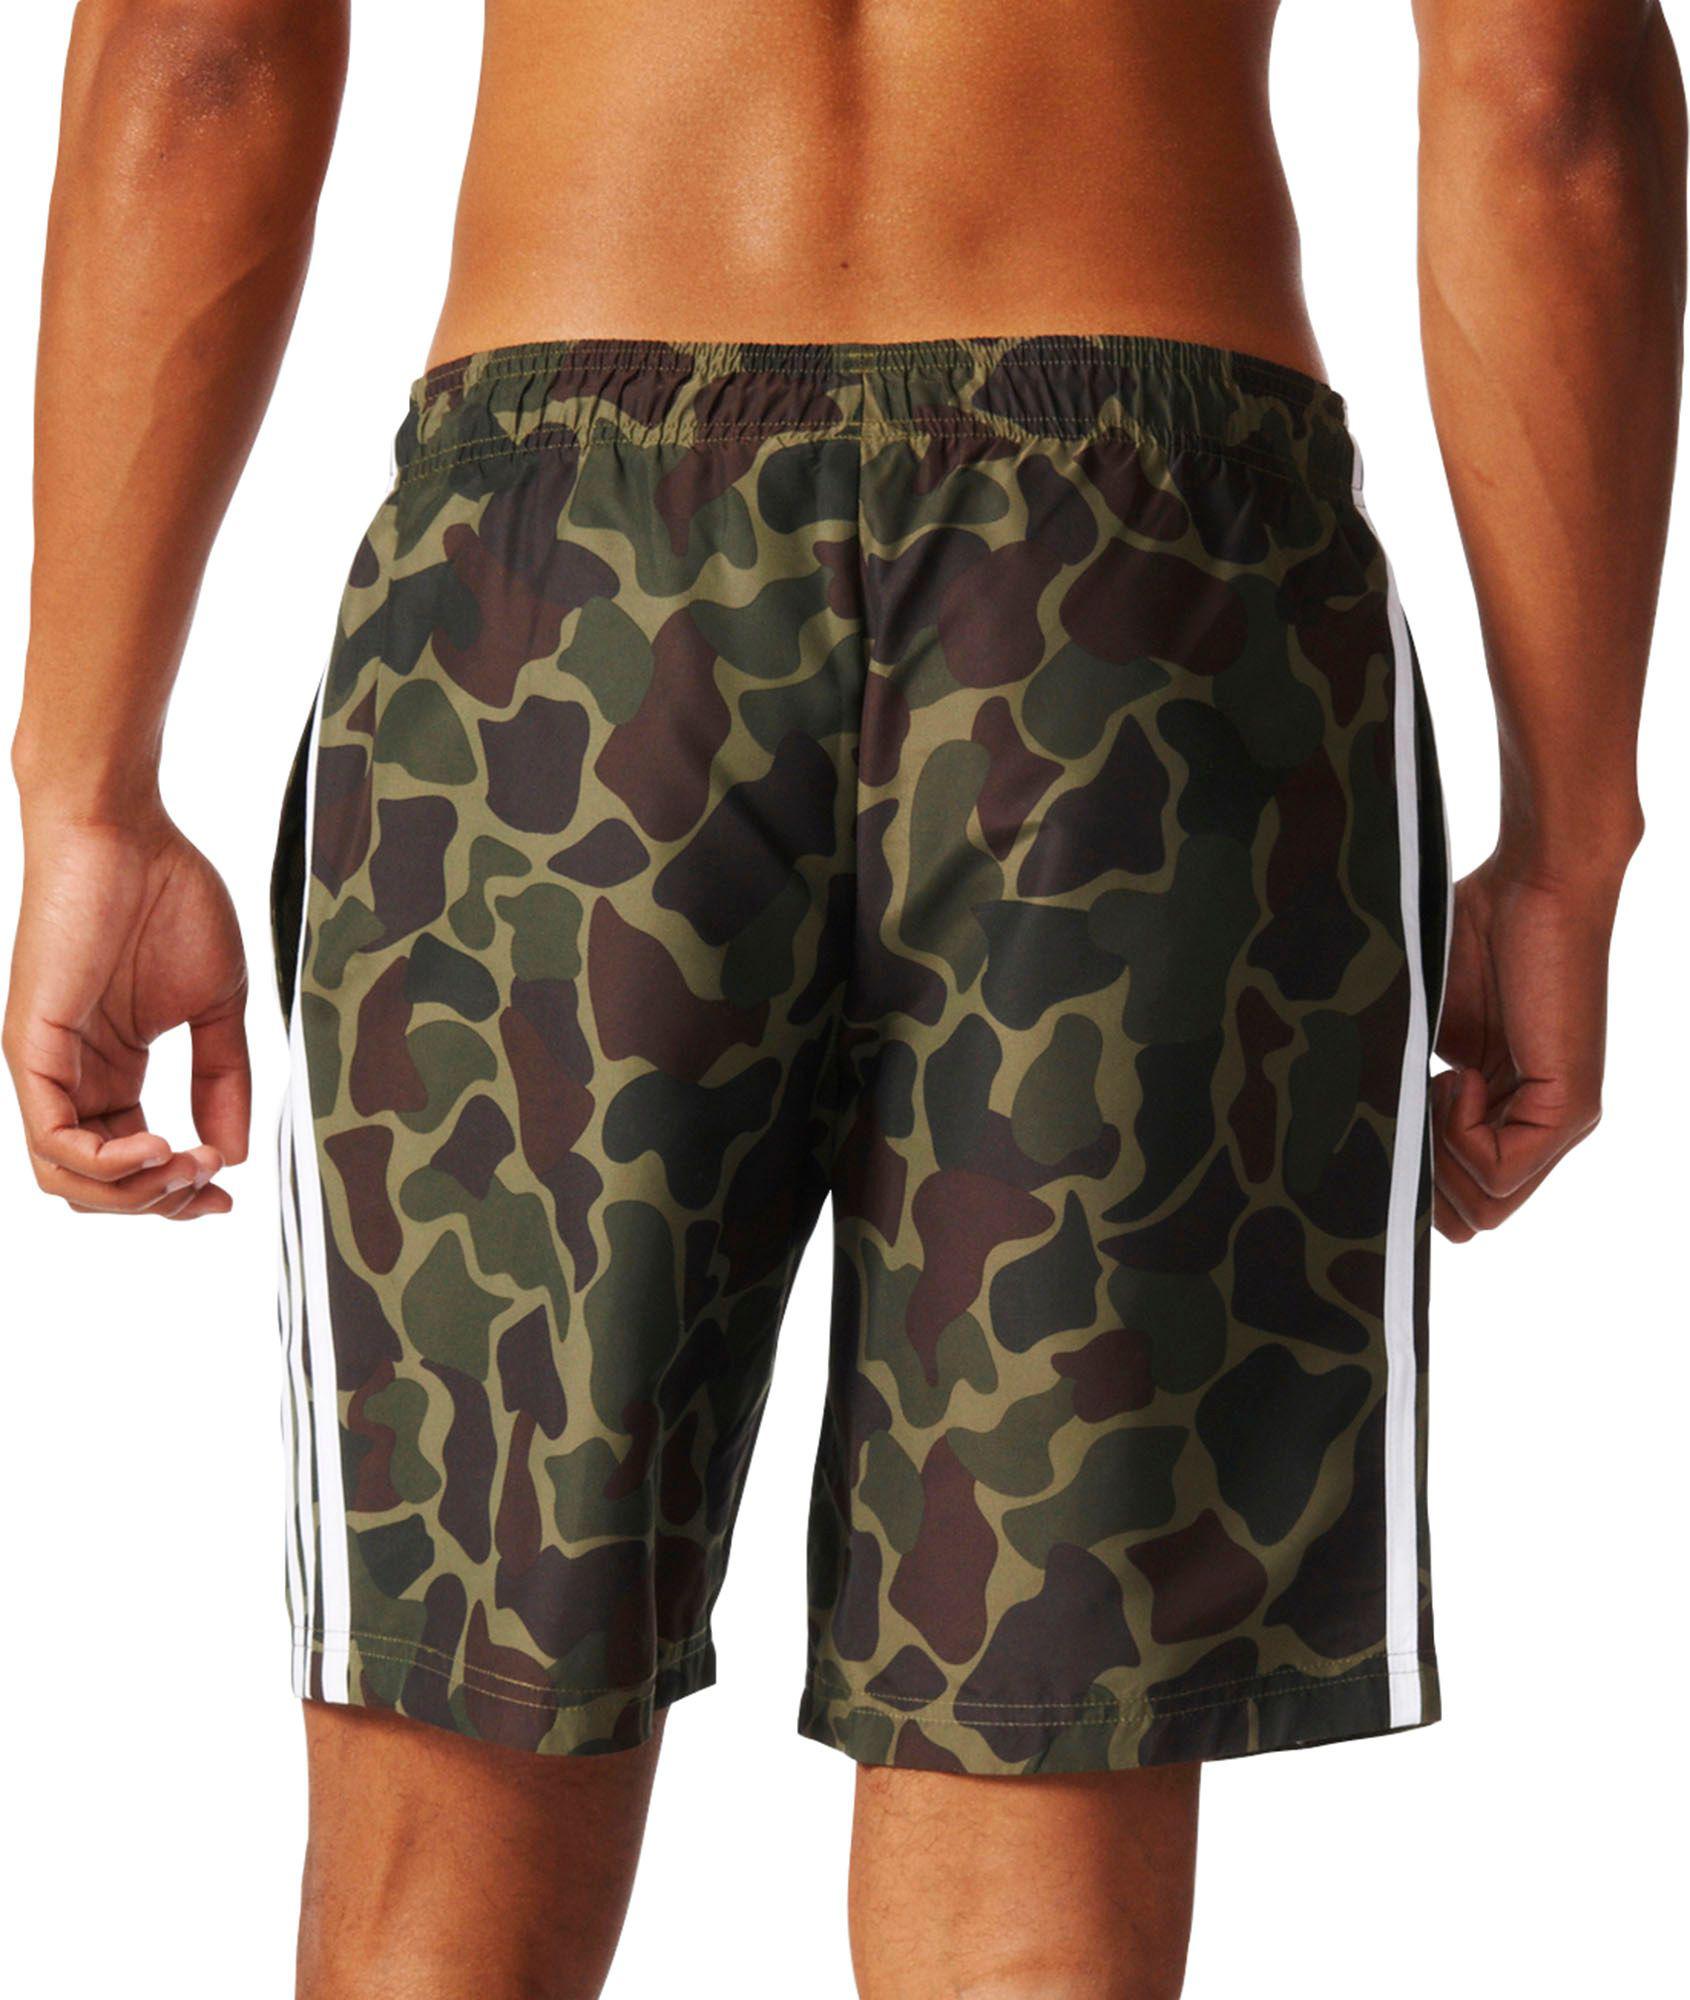 adidas Originals Synthetic Originals Camouflage Board Shorts for Men - Lyst